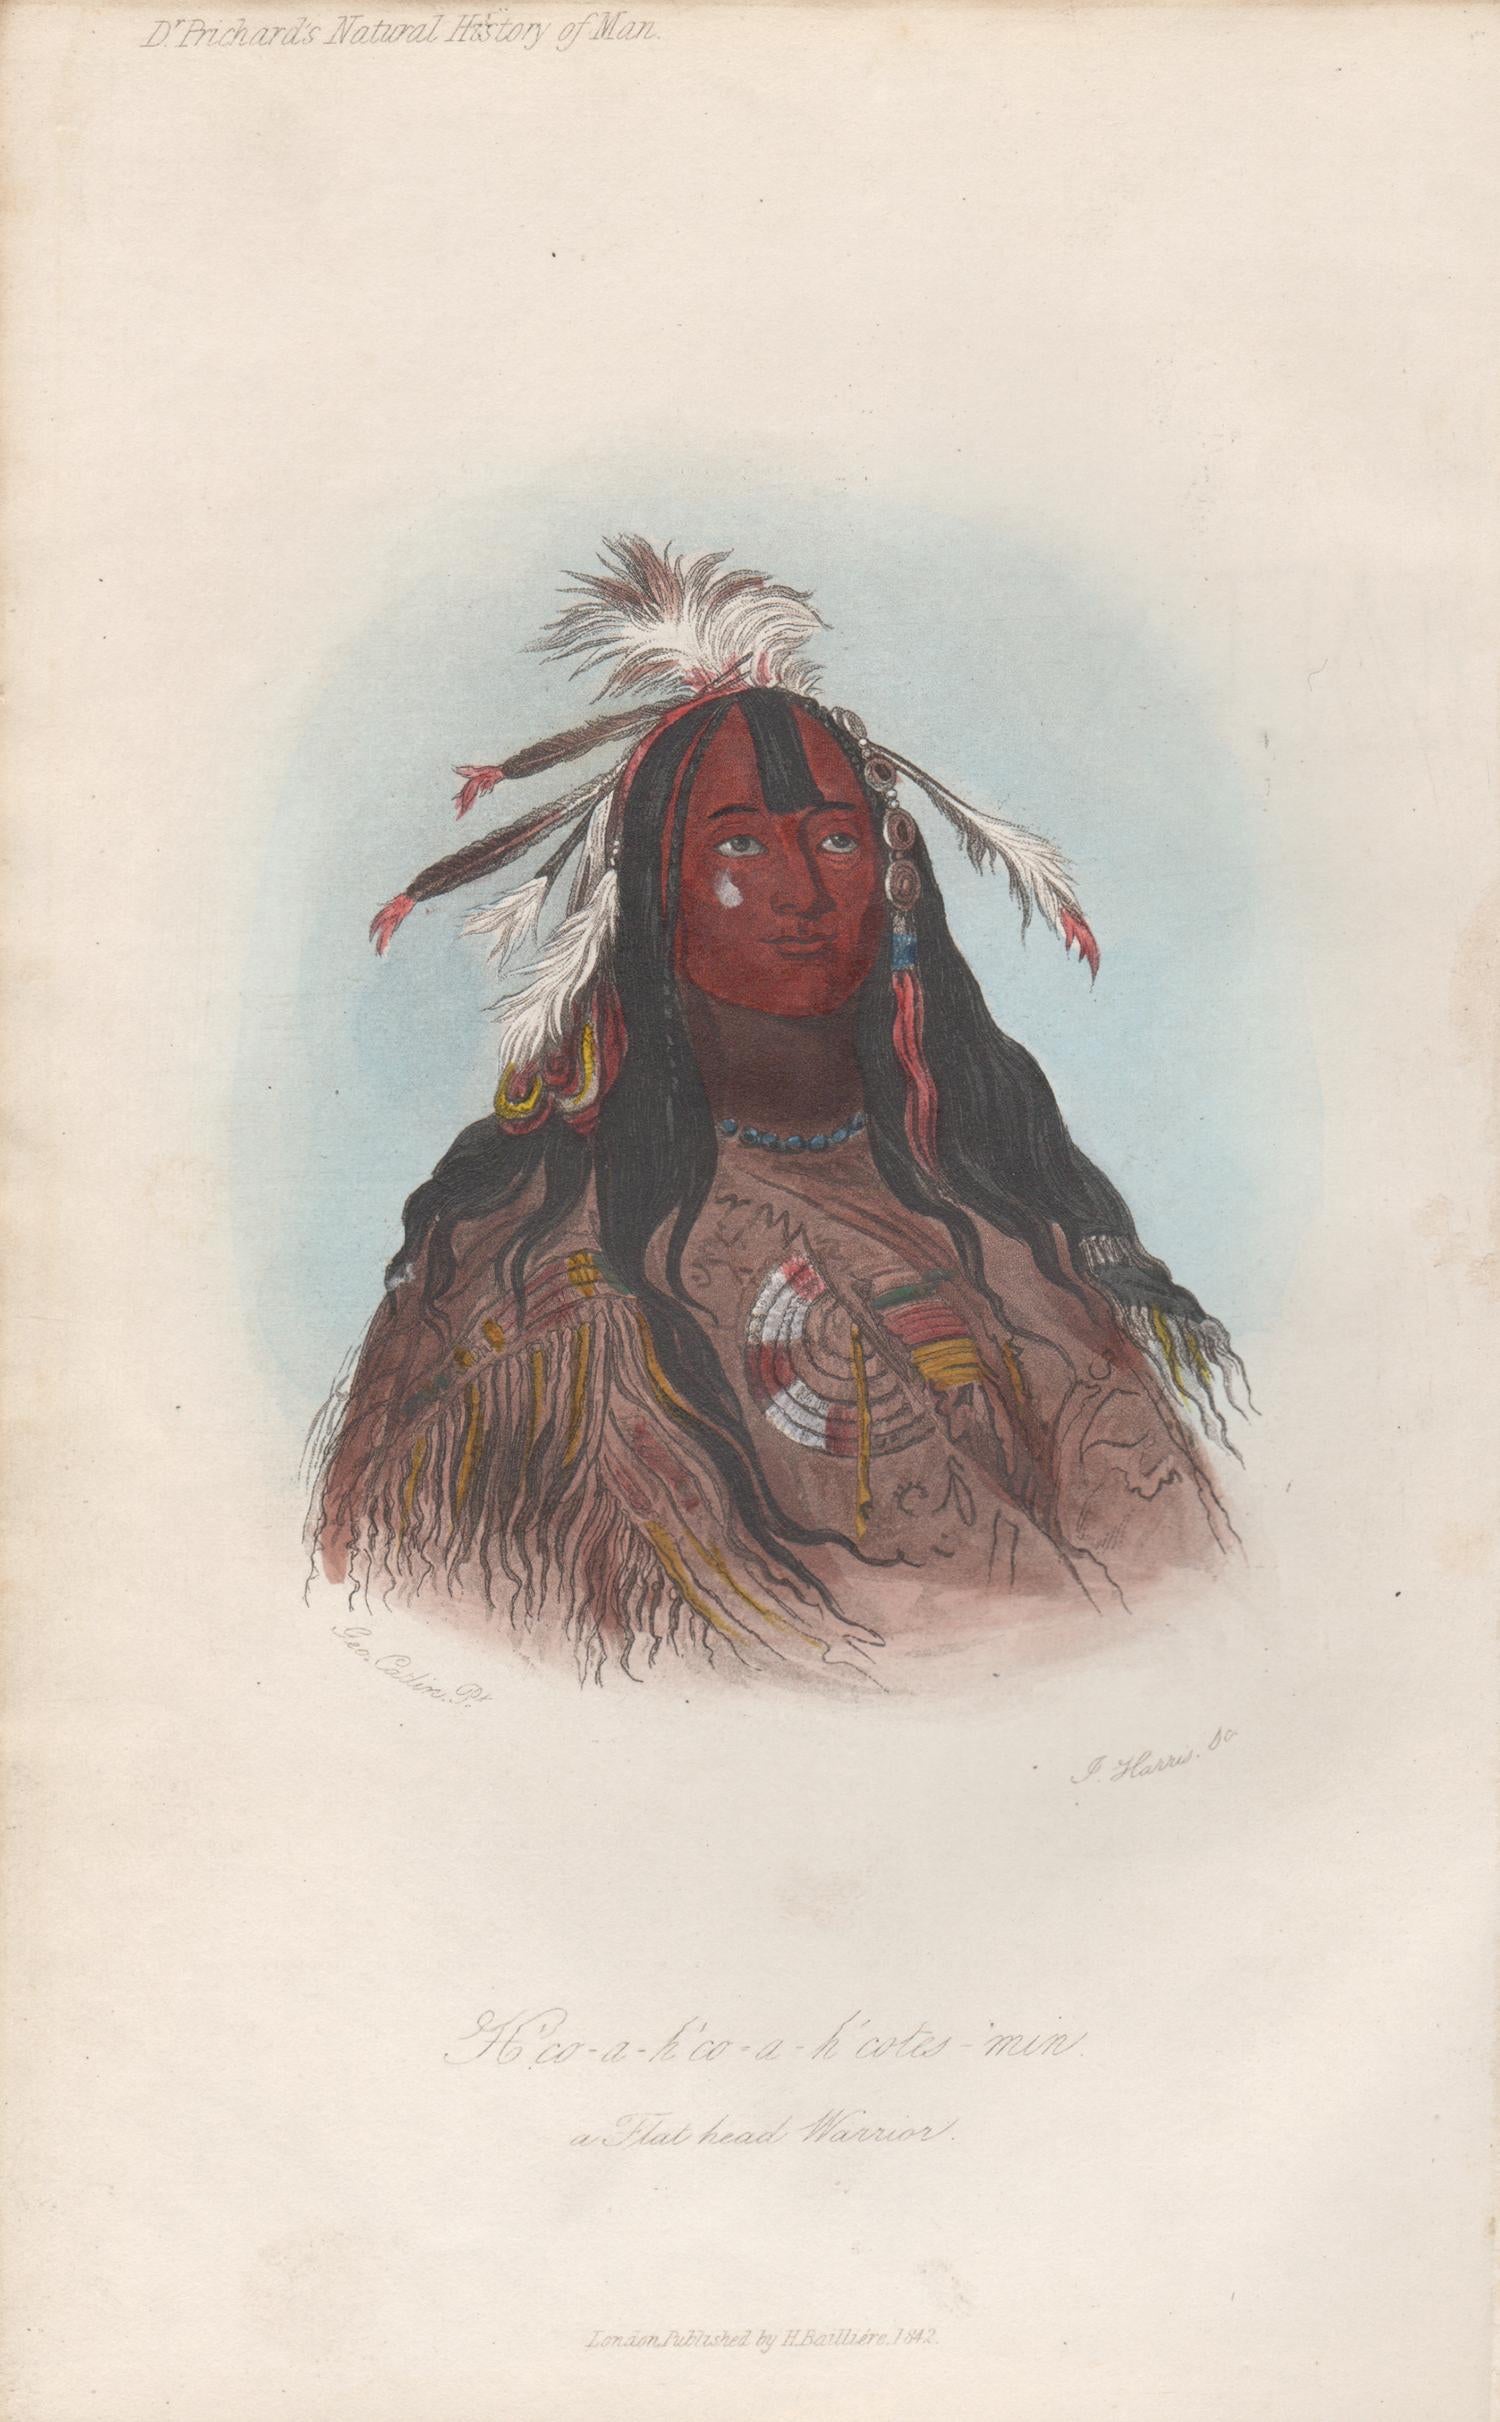 H'co-a-h'co-a-cotes-min - A Flat Head Warrior Native American portrait engraving